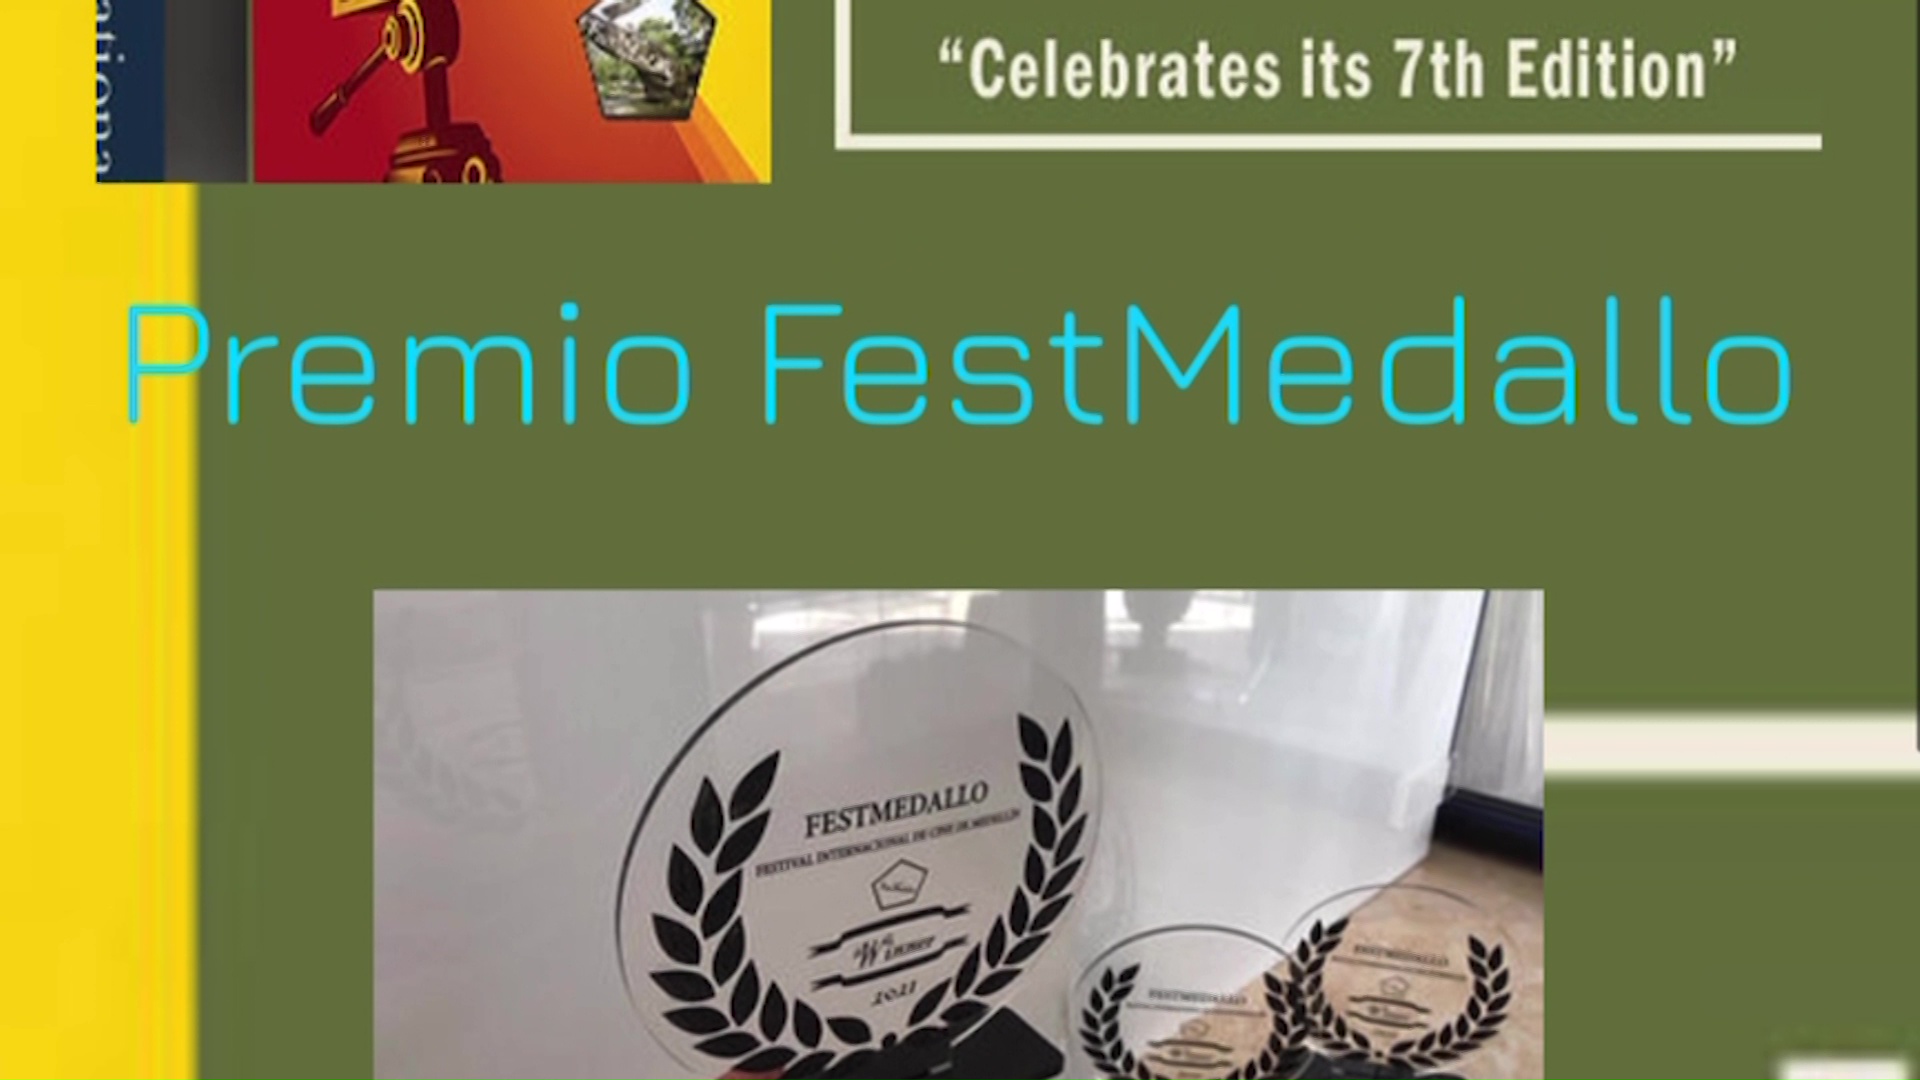 Fest Medallo denunciado como evento fantasma de cine